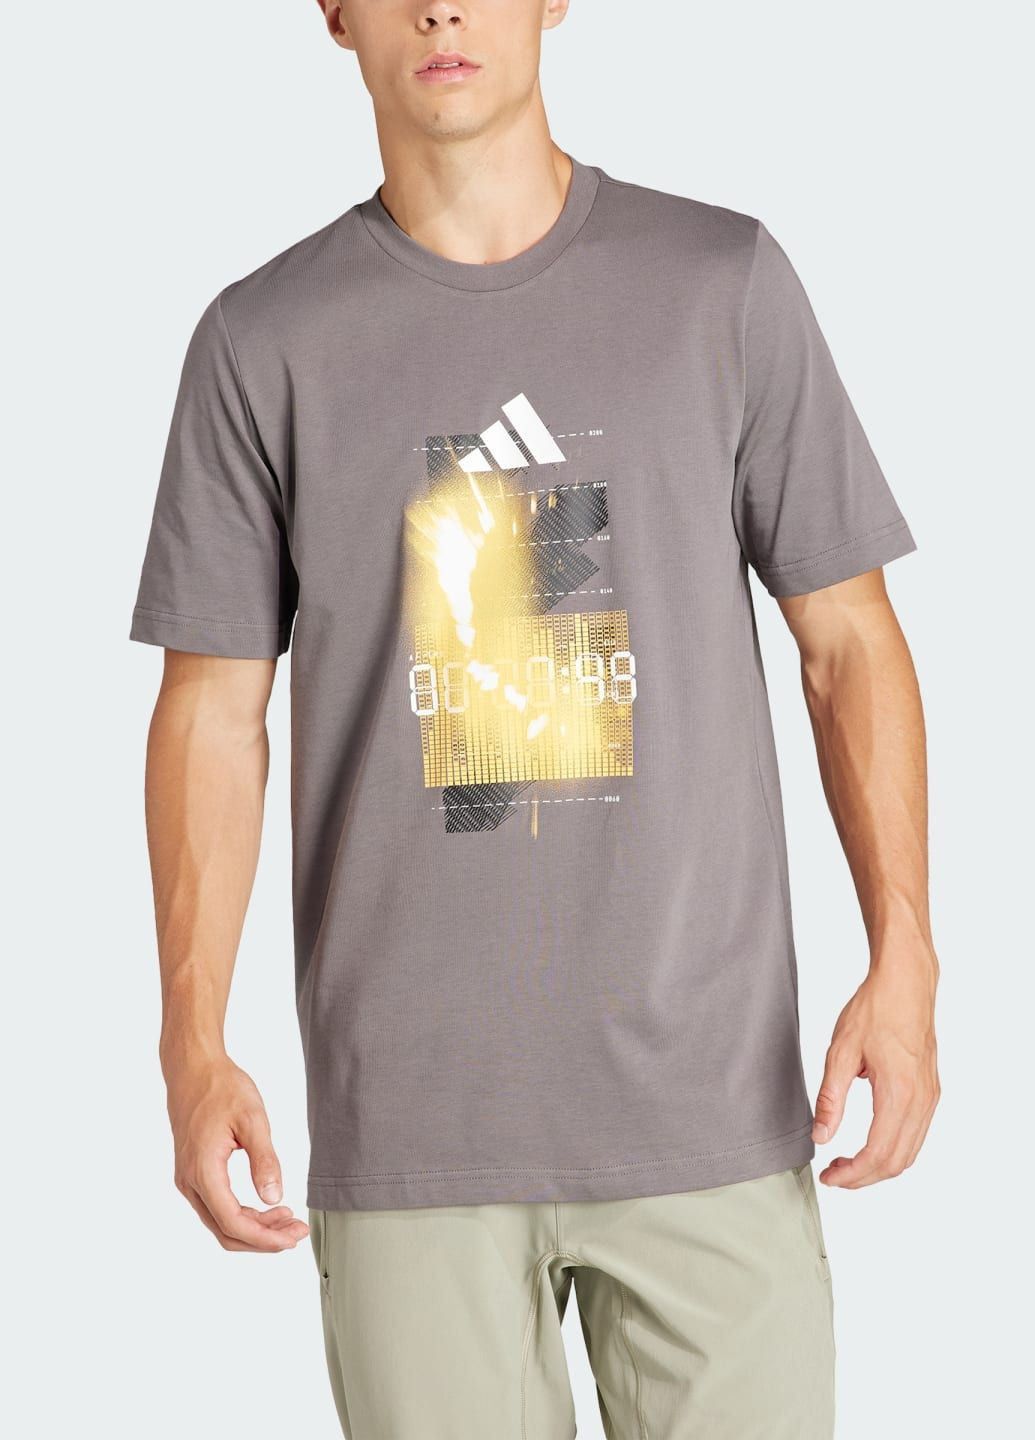 Коричневая футболка aeroready hiit display graphic adidas